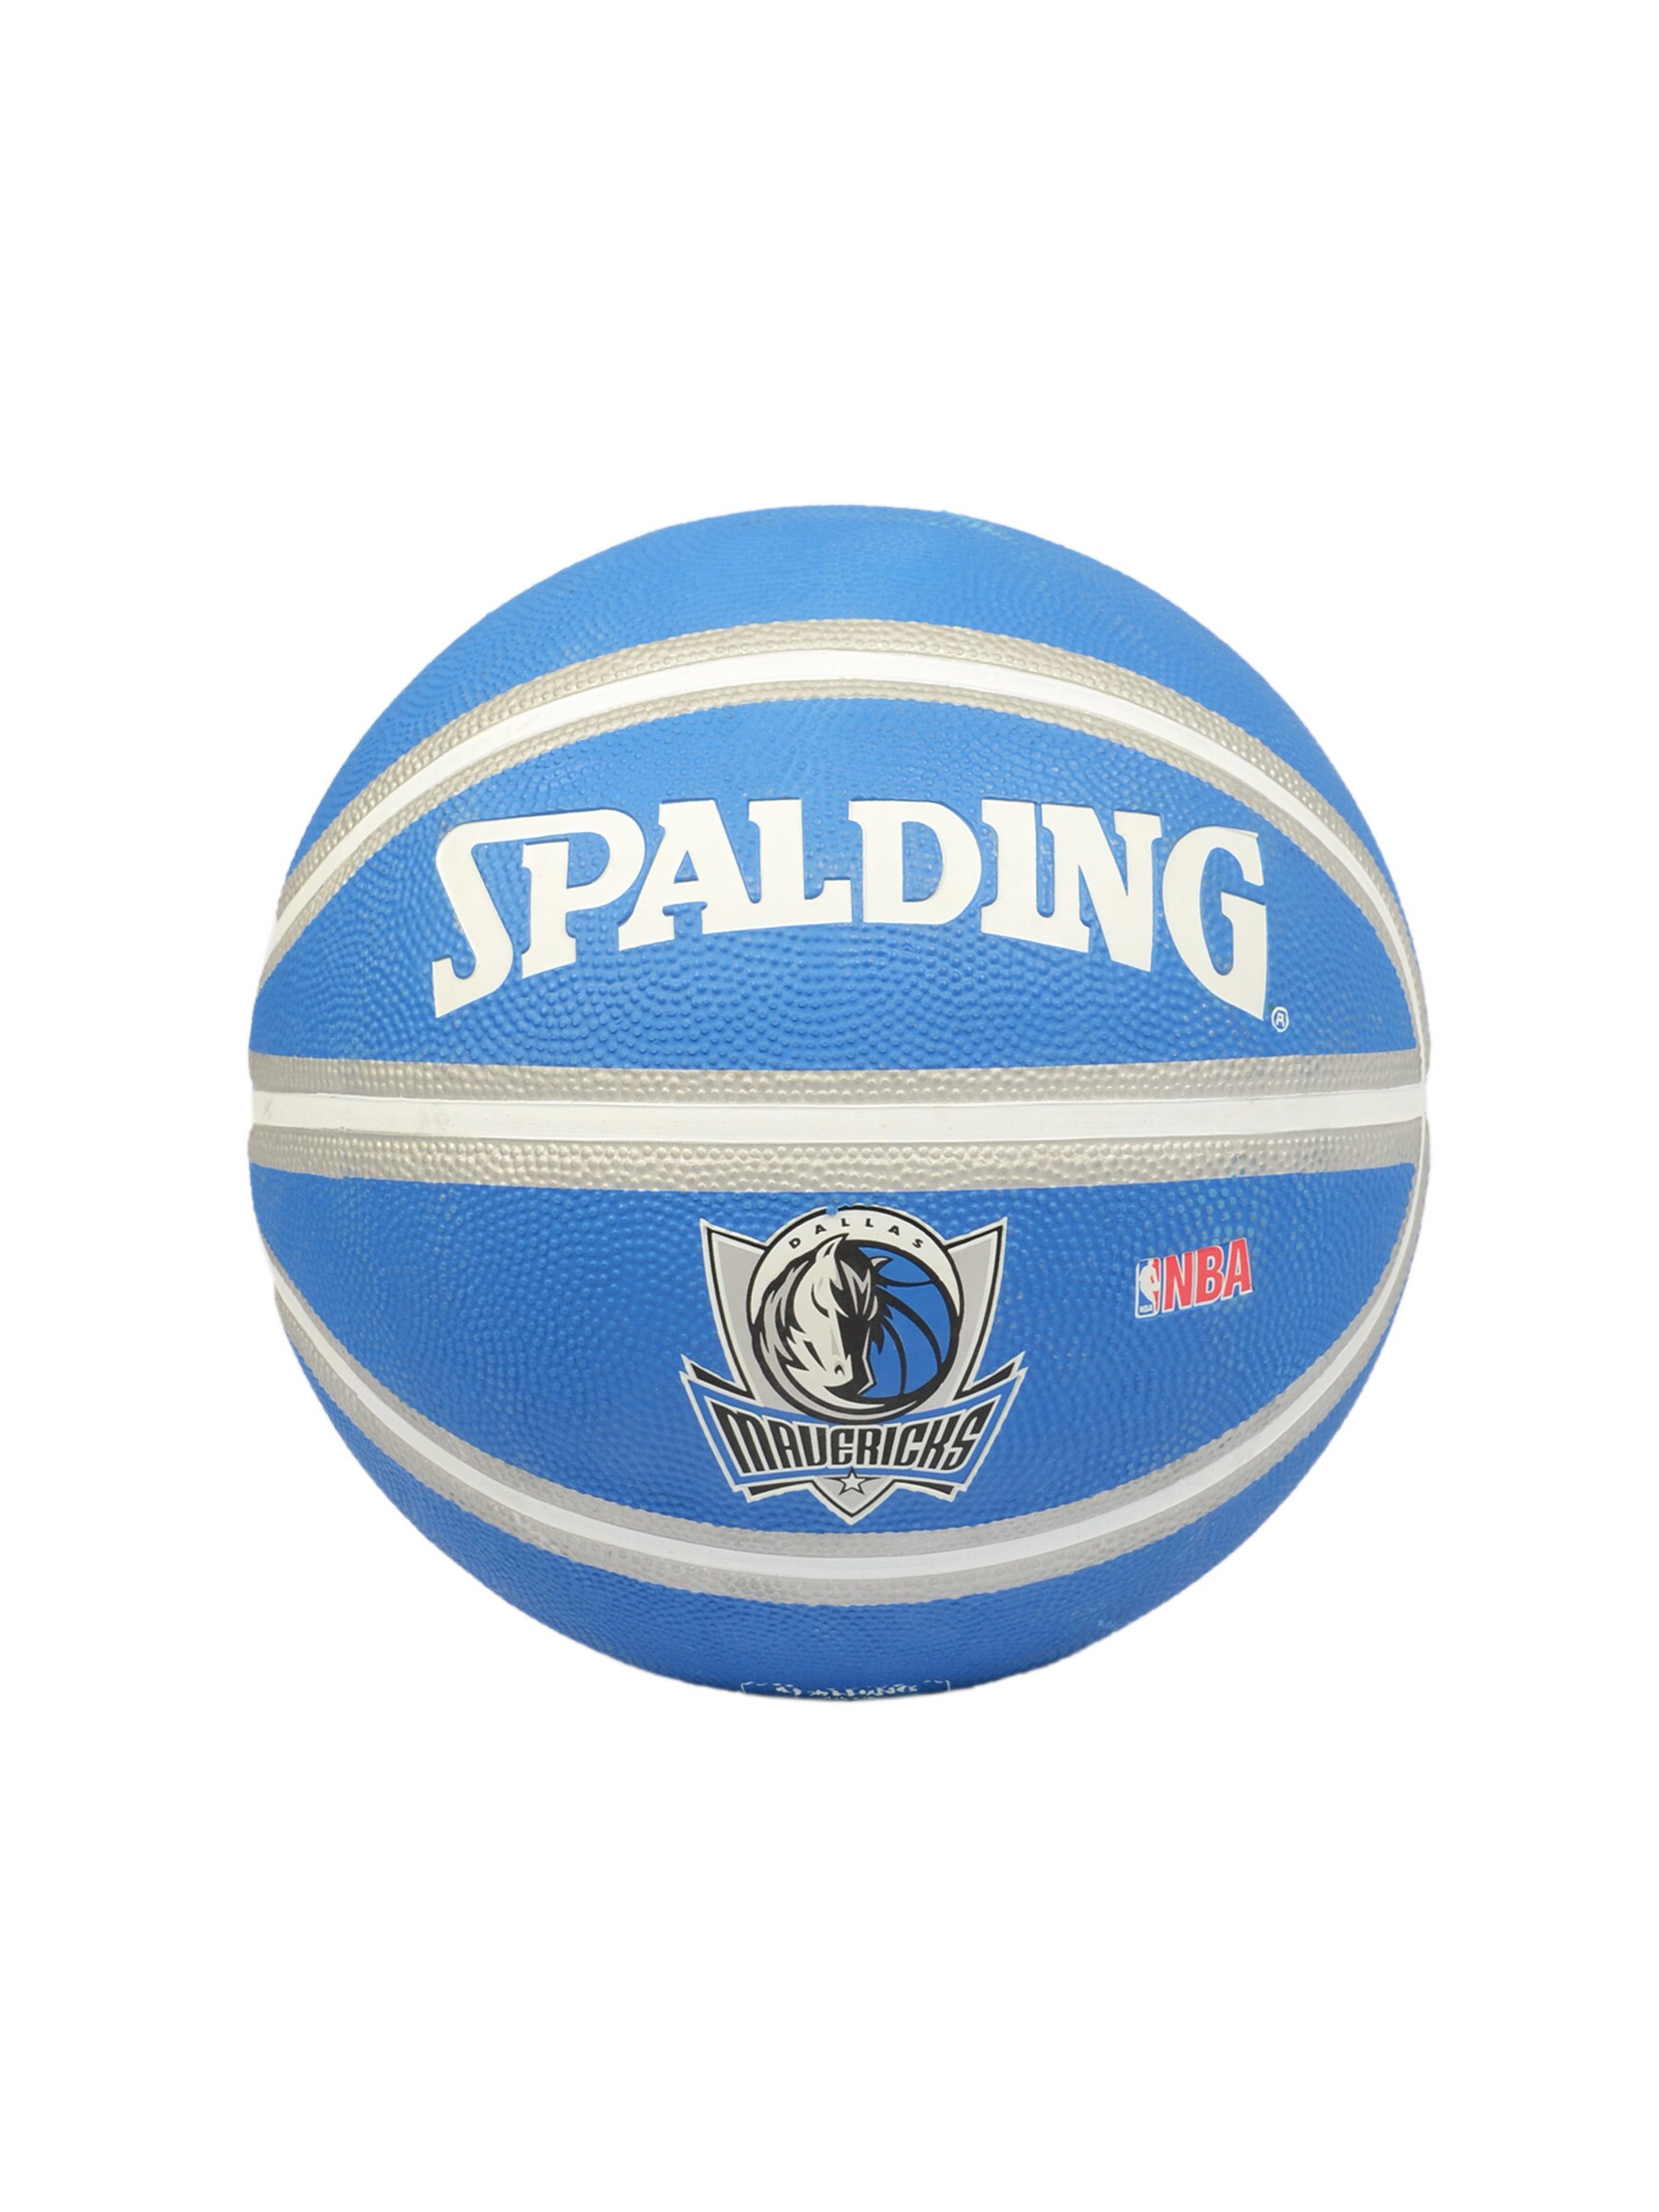 Spalding Unisex Blue Basketball